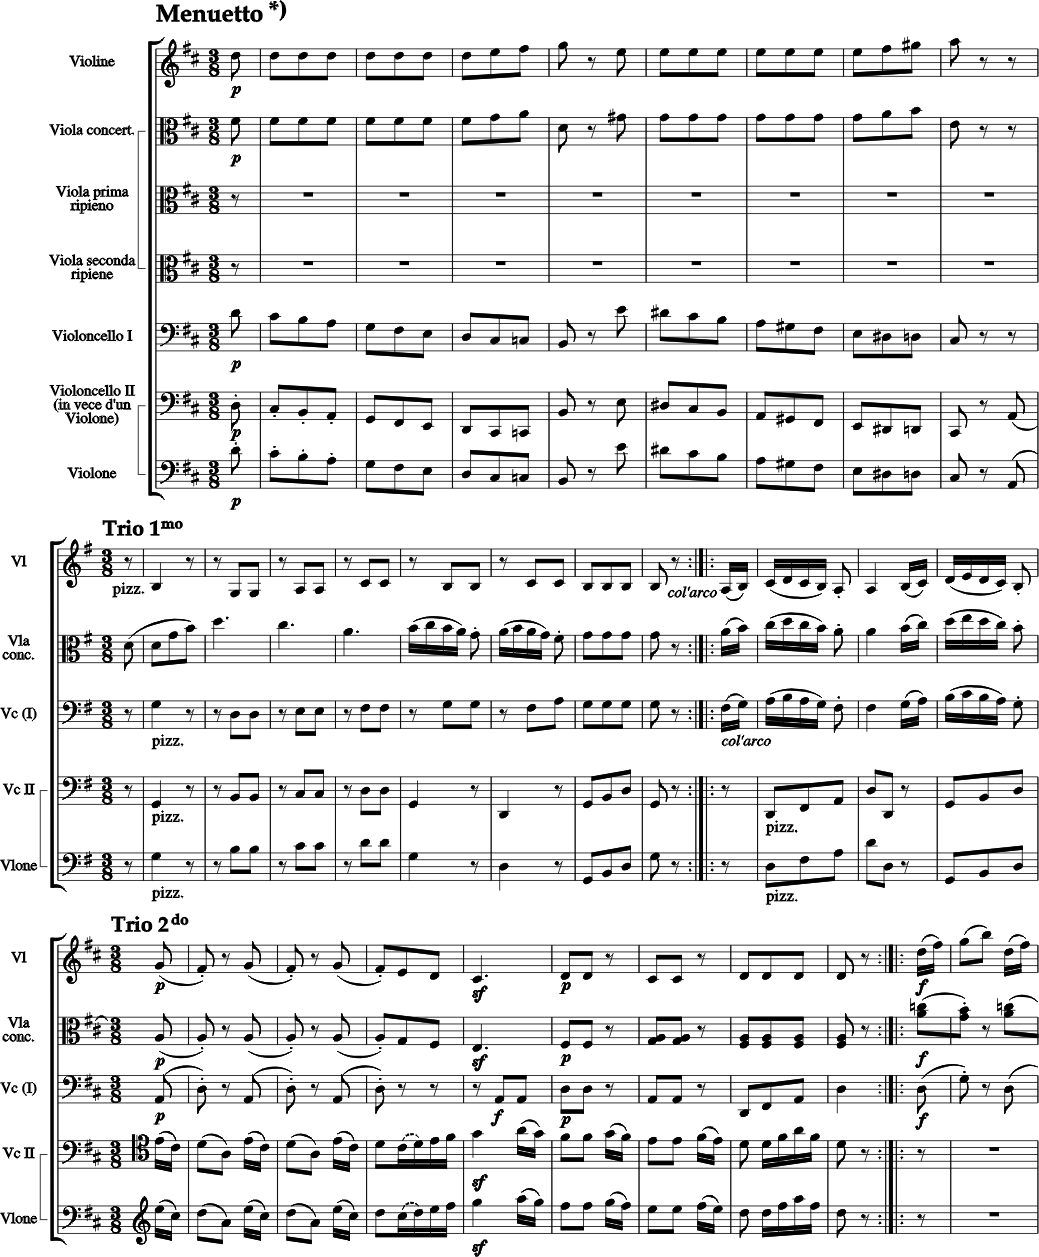 Viola d'amore, Violino, Viola, Violoncello e Violone / Contrabbasso, due Viole, Violino, Viola, Violoncello e Violone / Contrabbasso